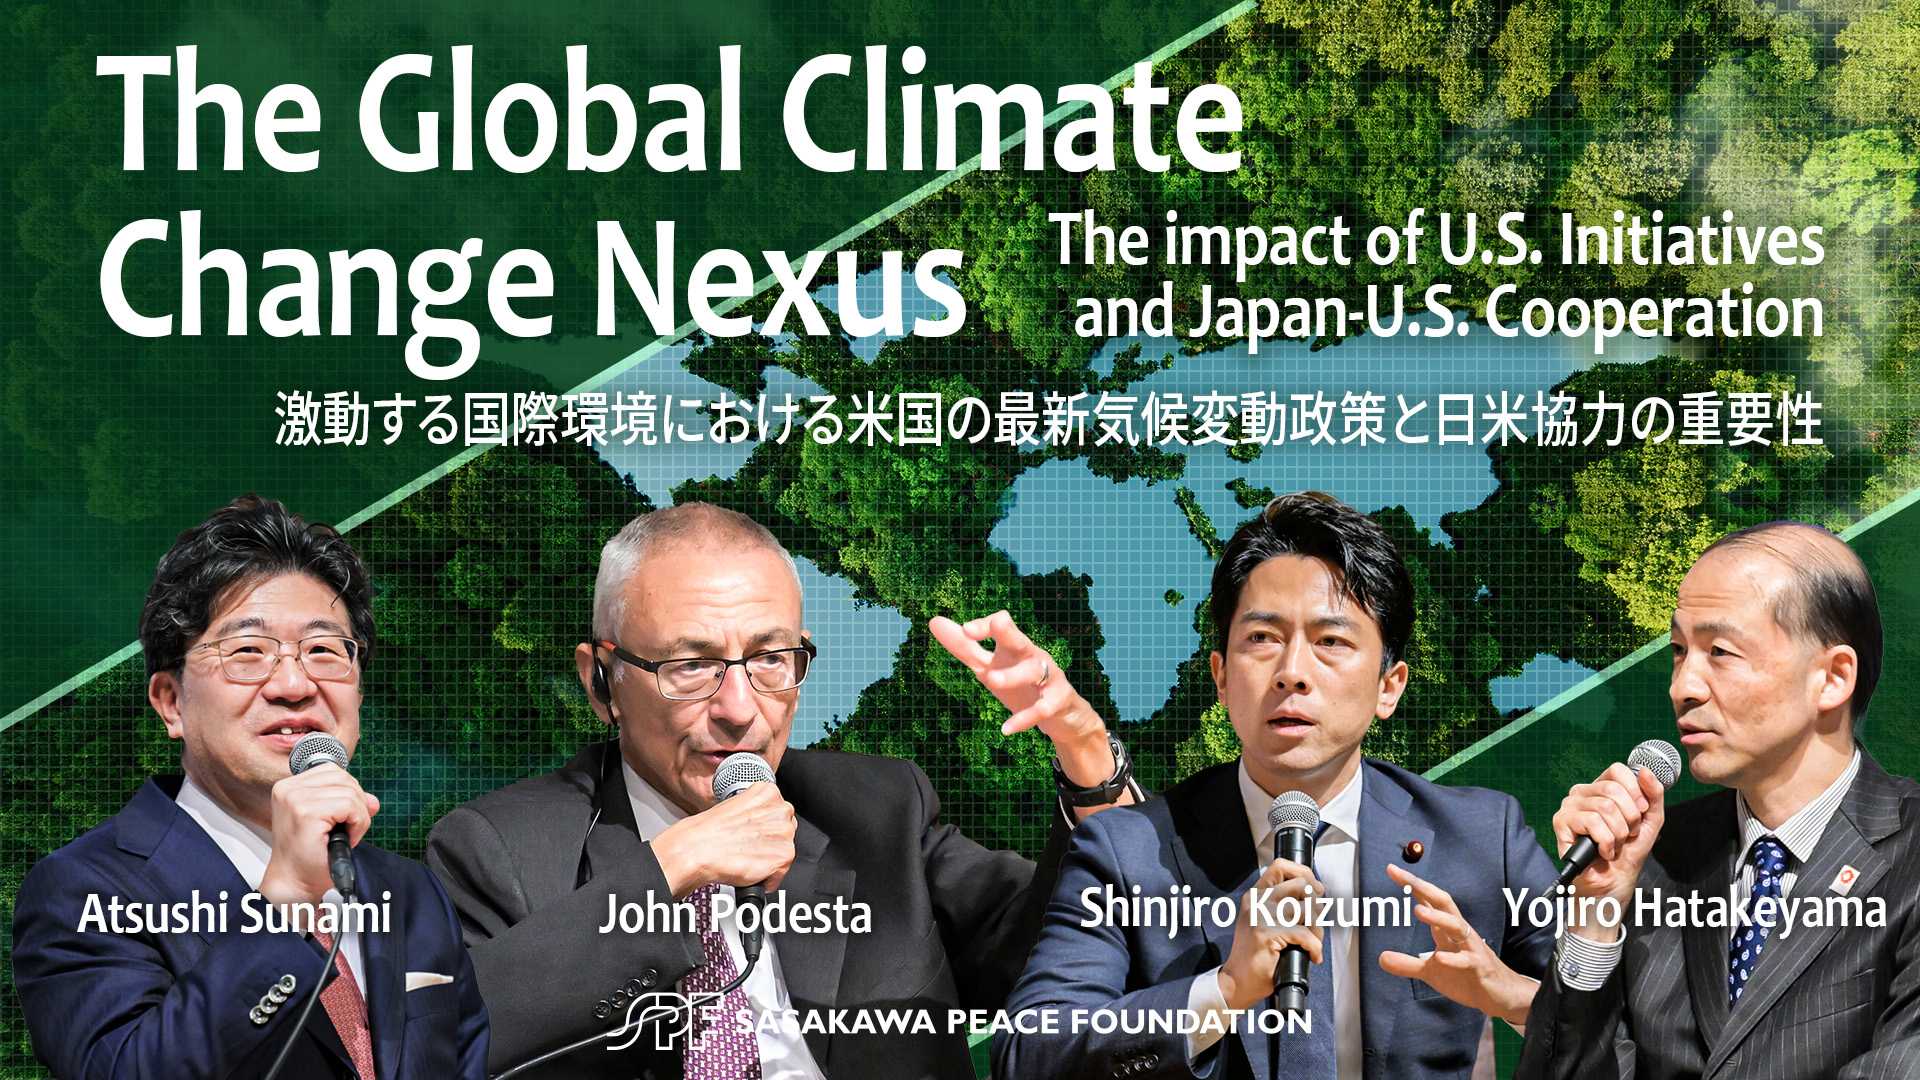 【Public Seminar】The Global Climate Change Nexus Featuring Mr. John Podesta